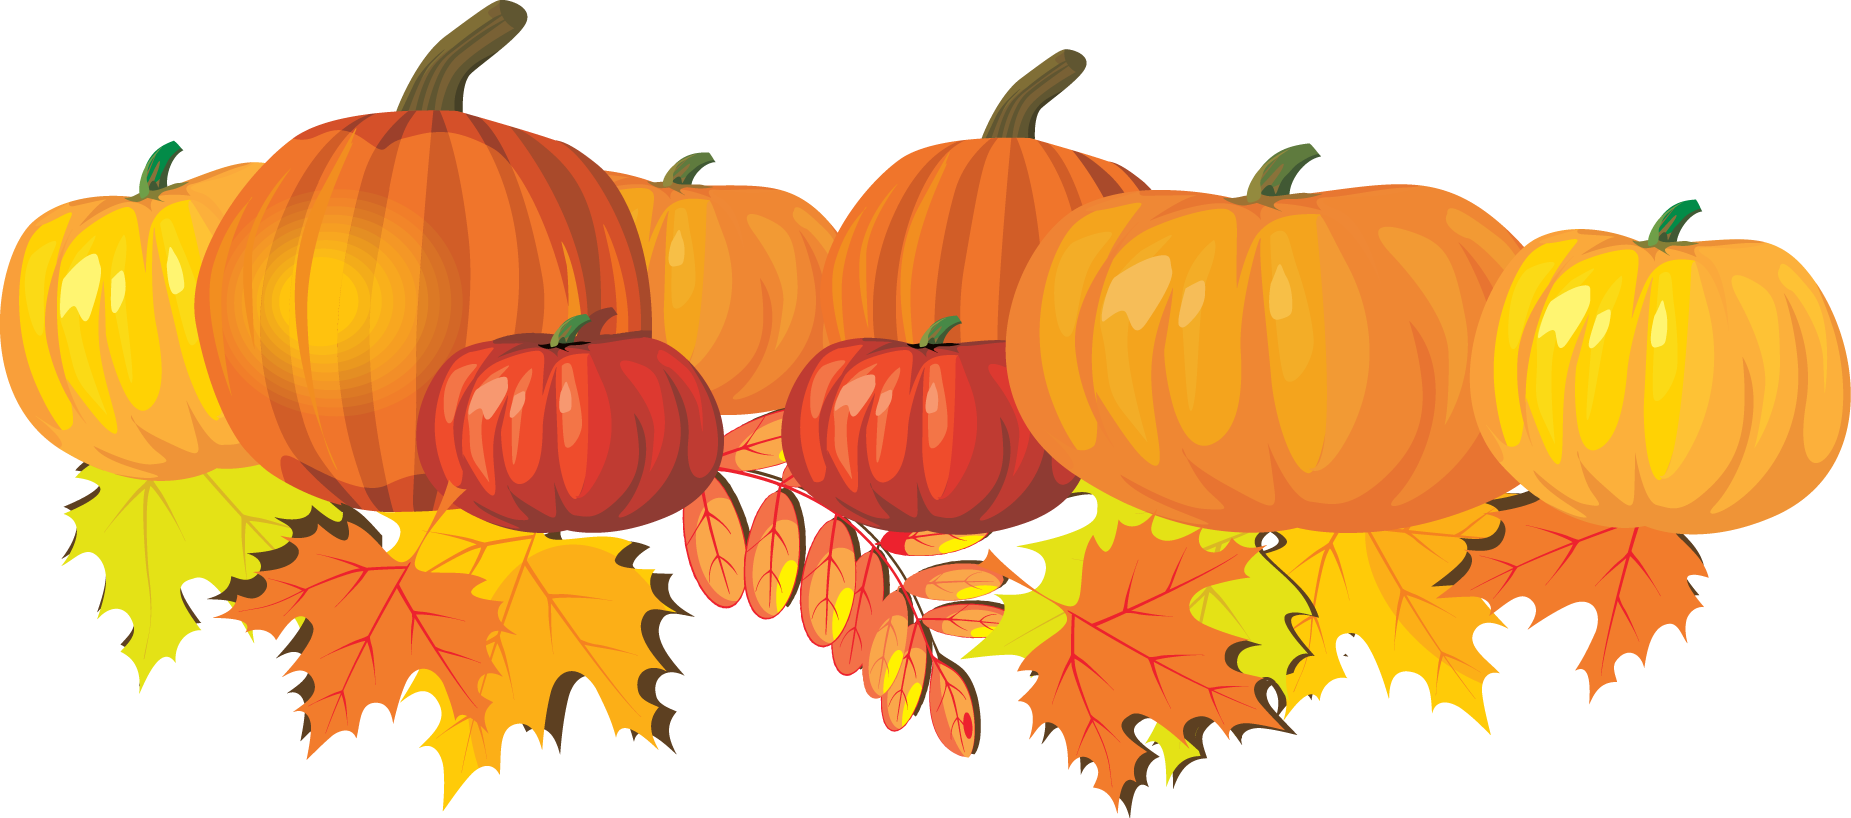 Pumpkins turkey and pumpkin c